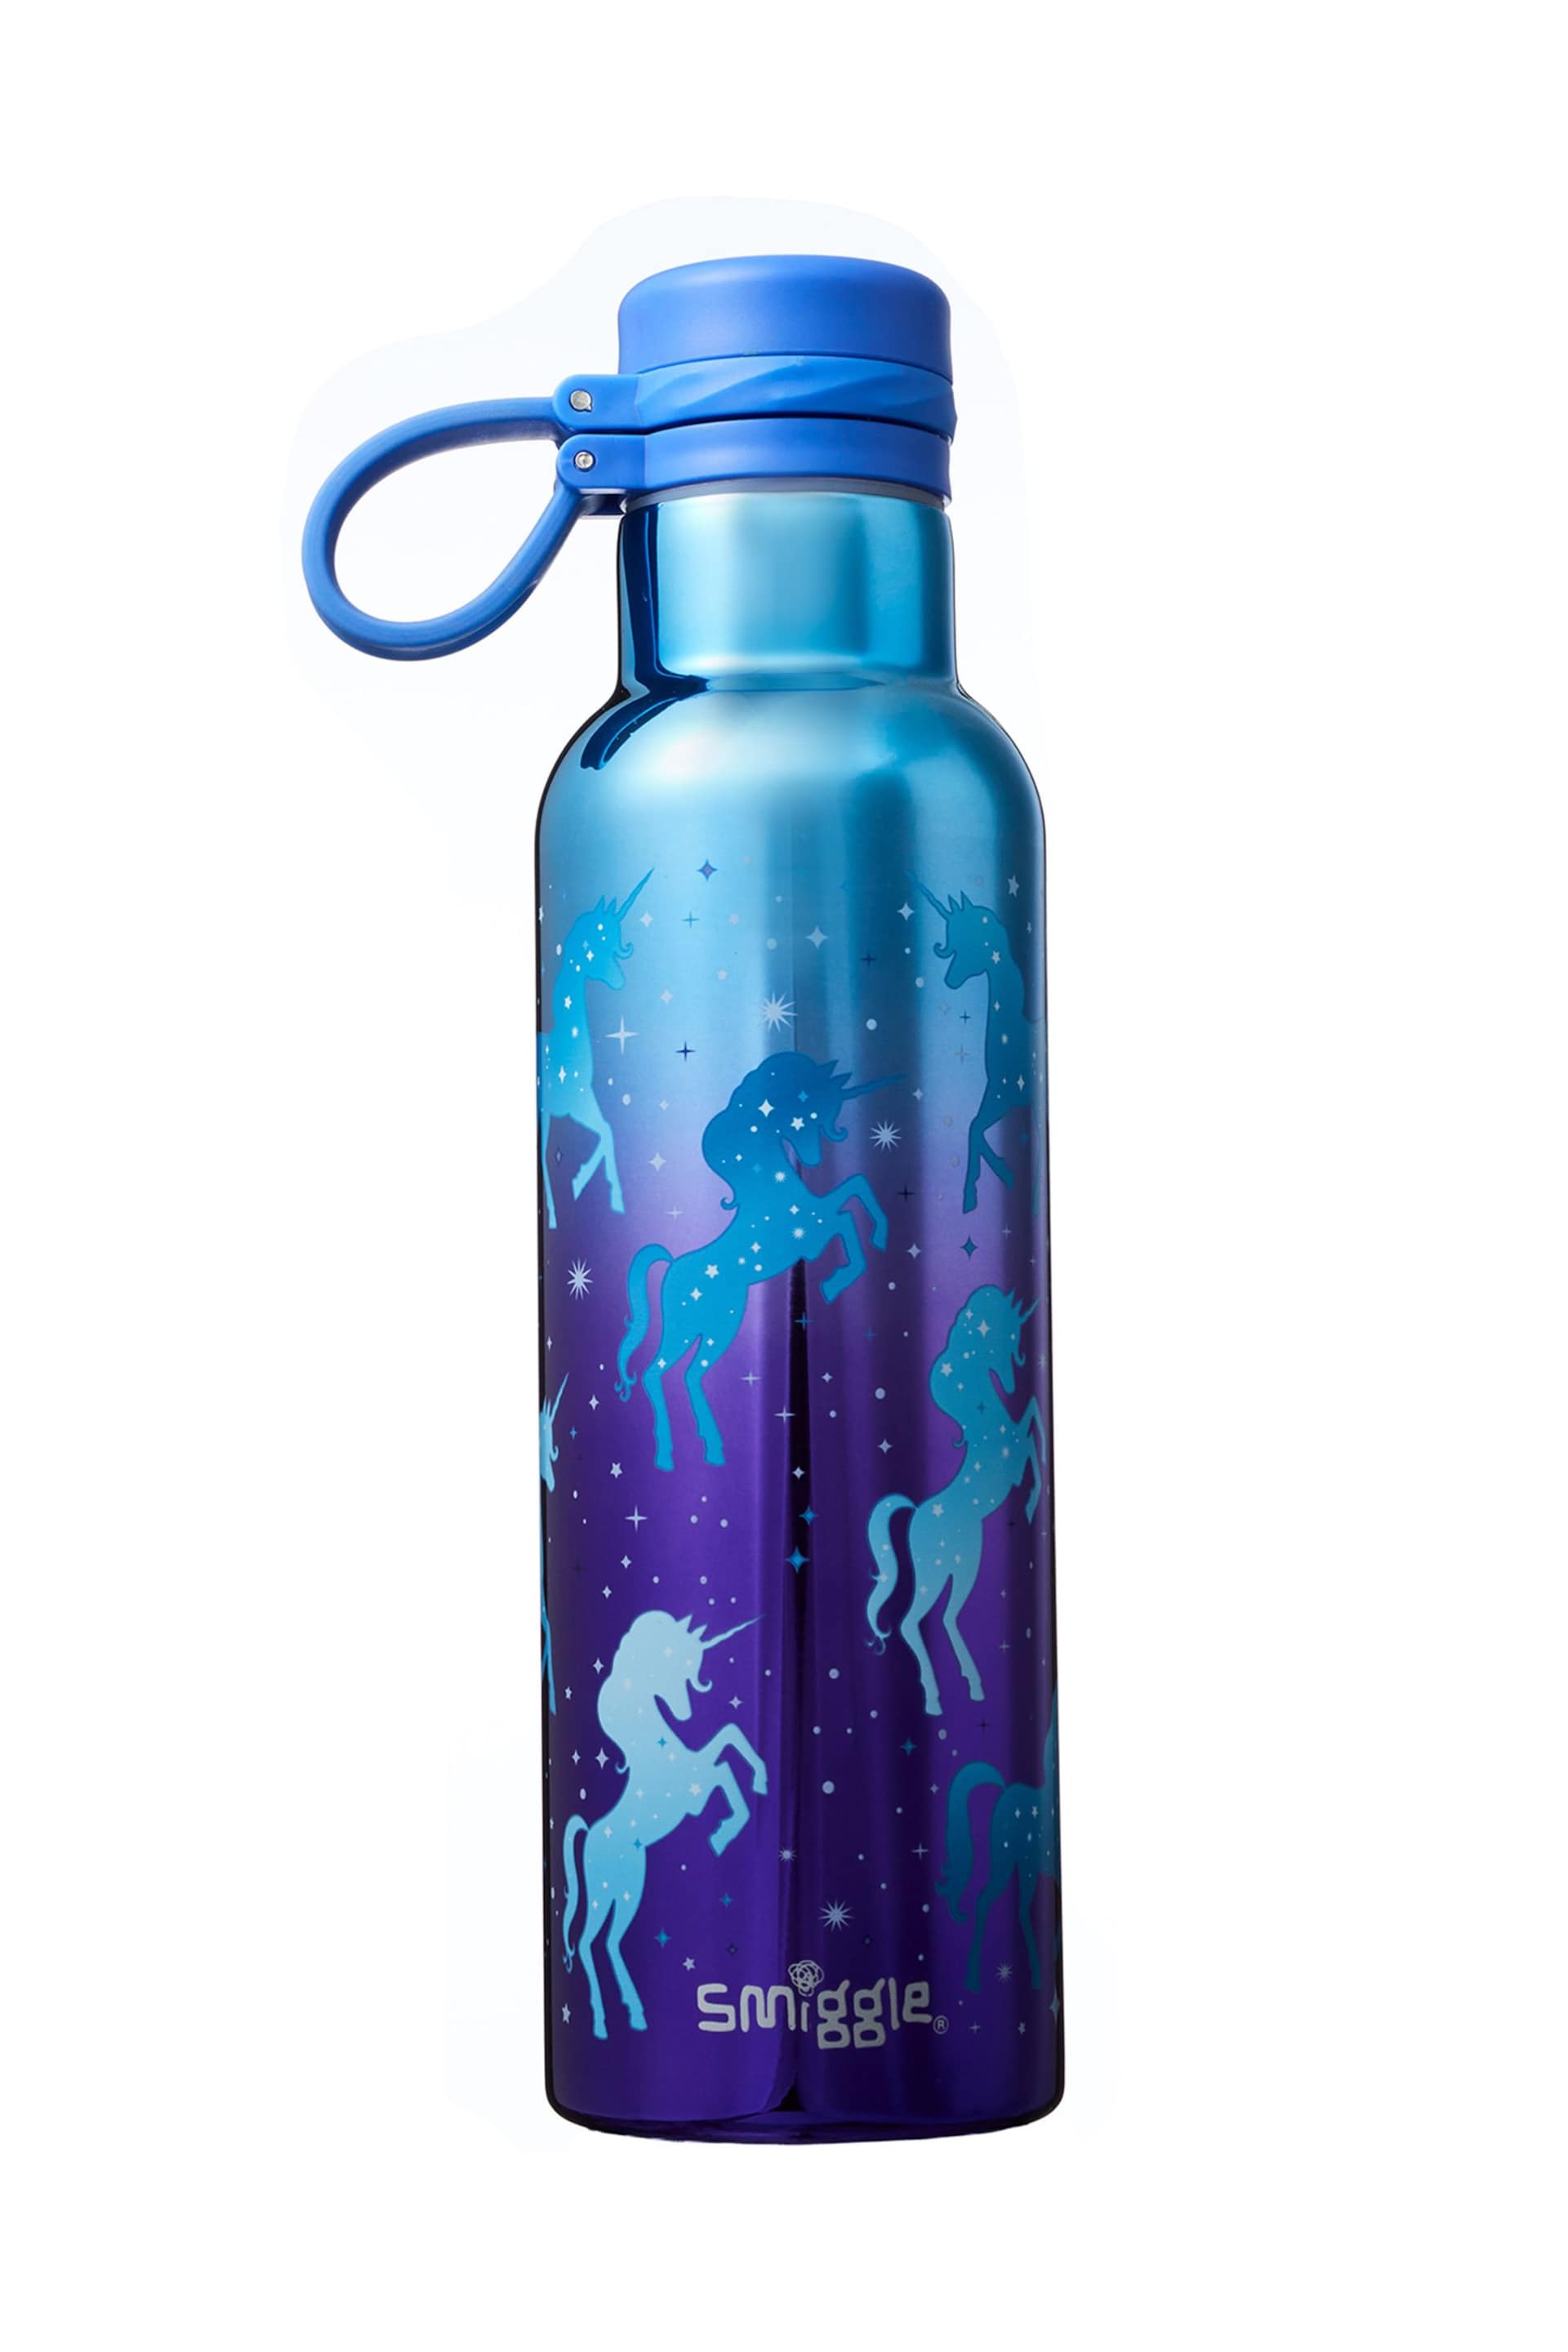 Smiggle Purple Unicorn Sports Stainless Steel Drink Bottle - Image 1 of 1